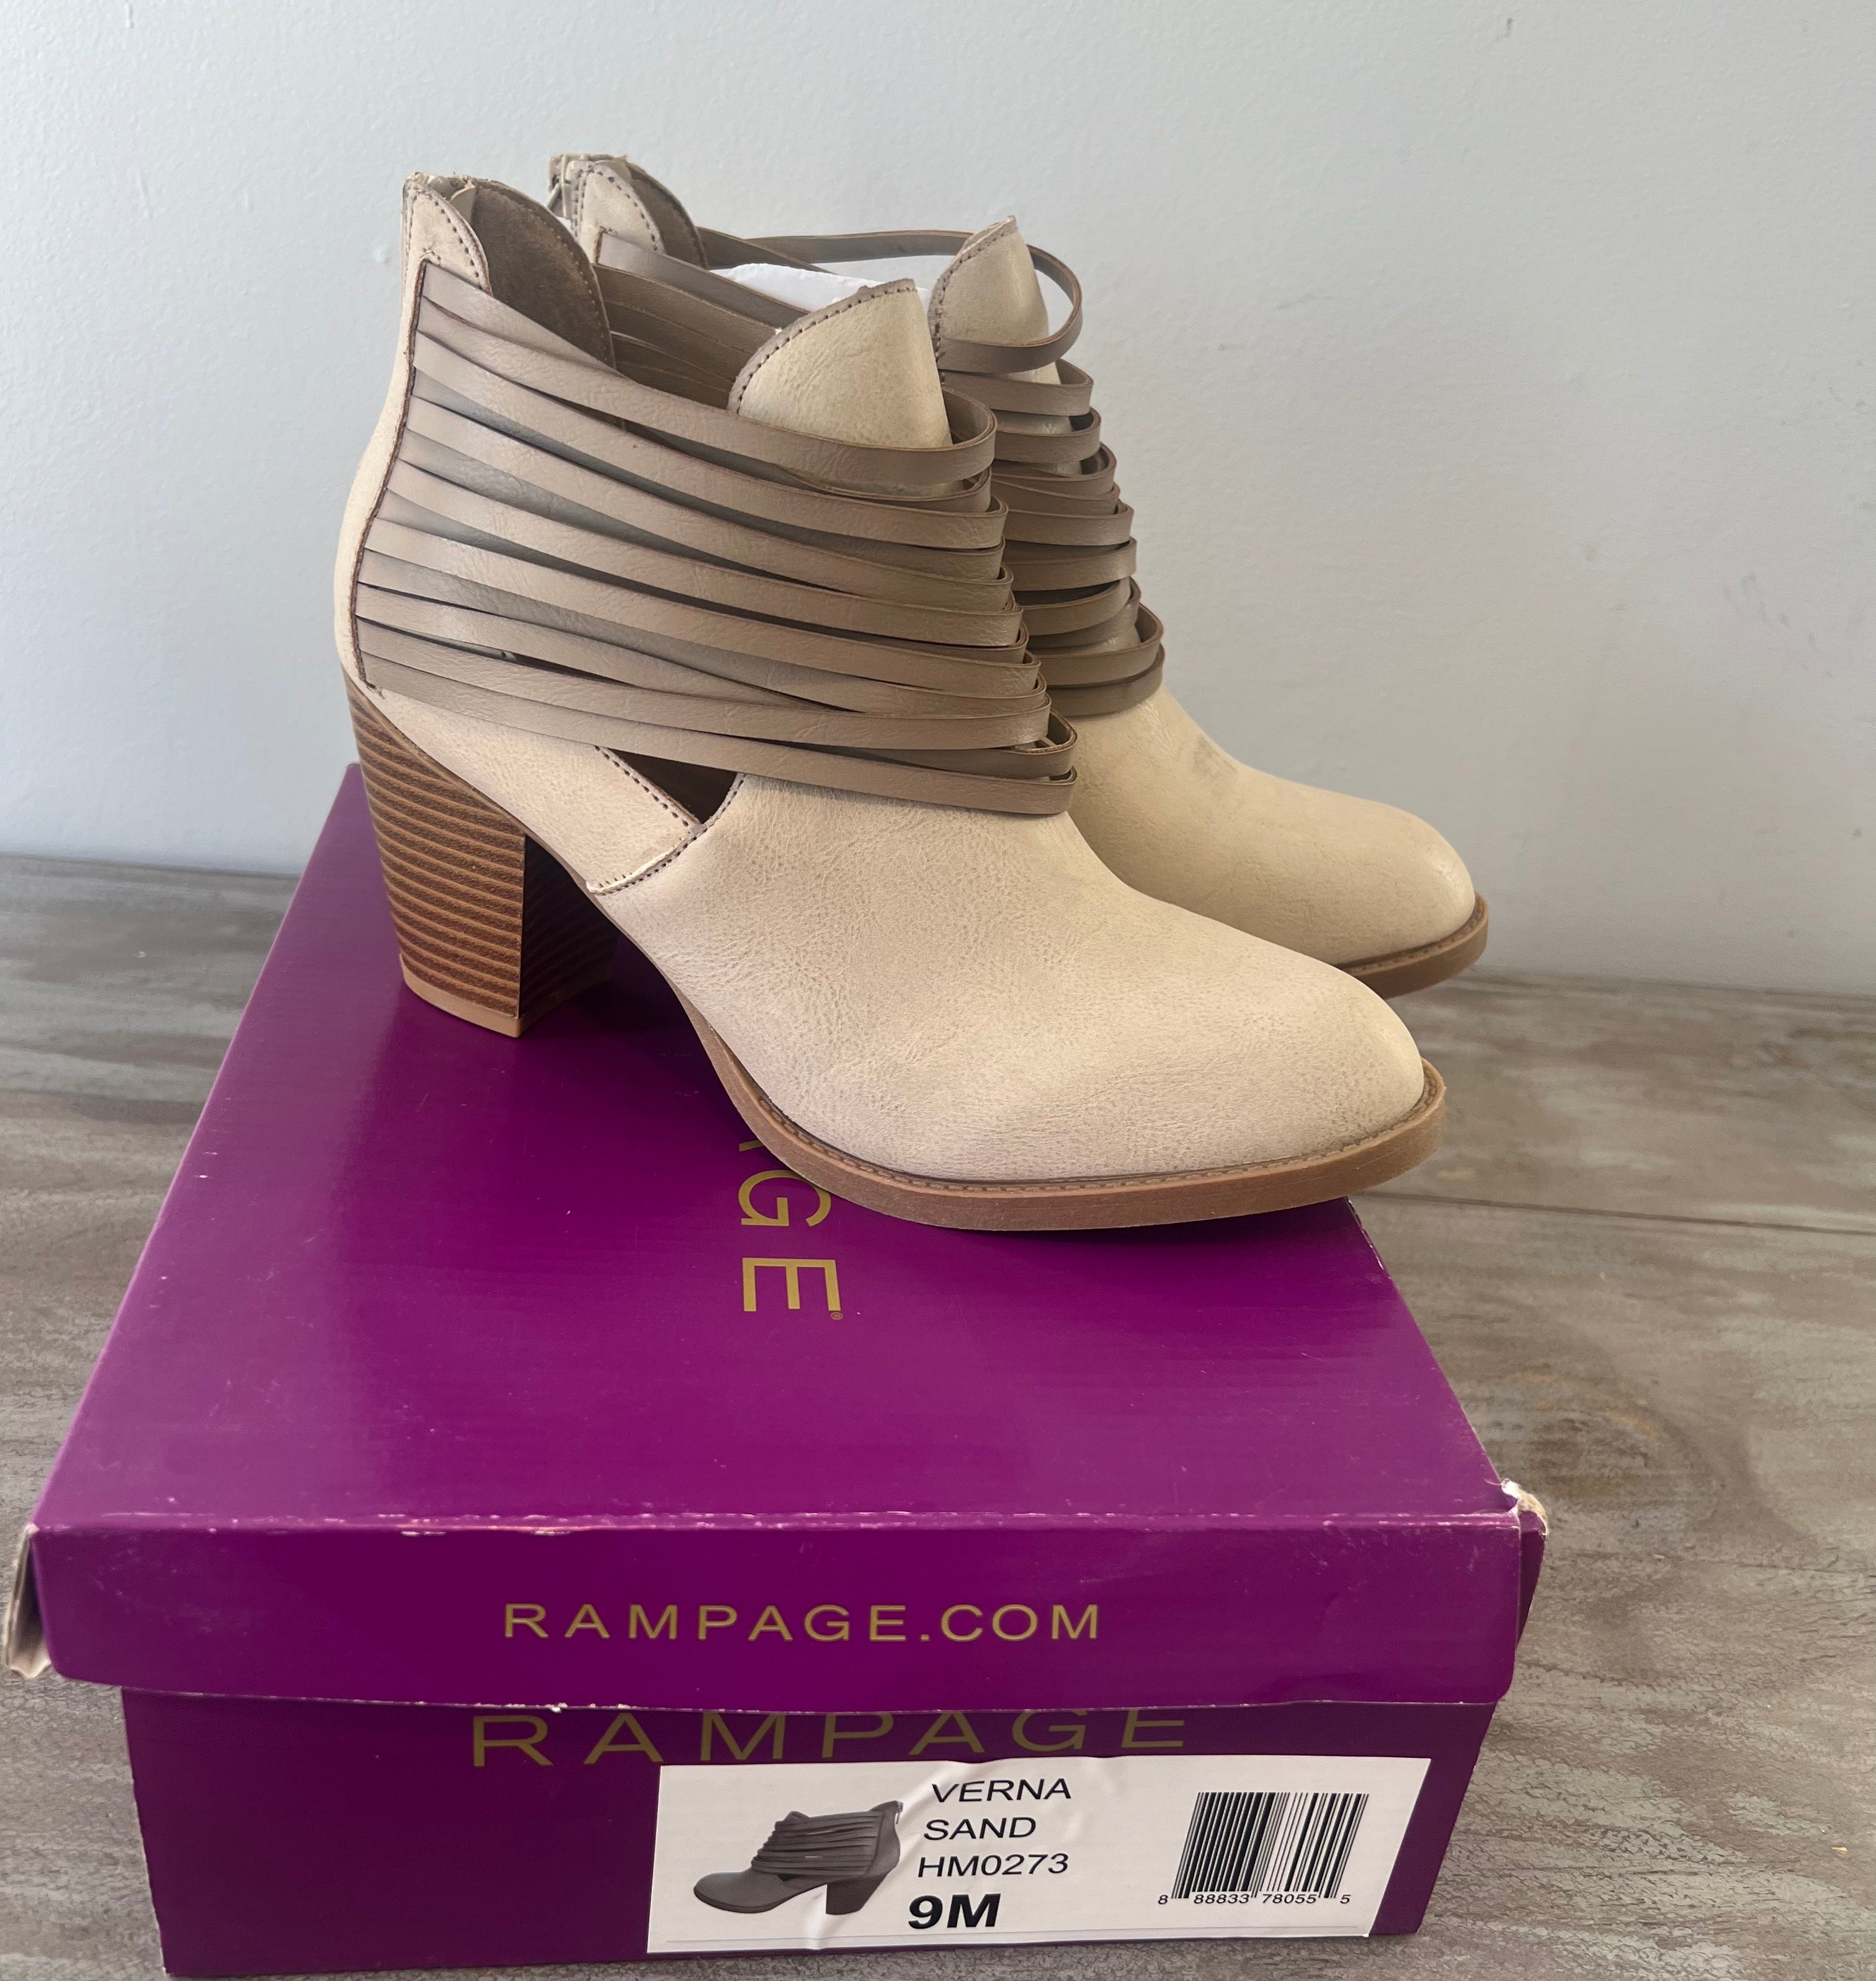 Rampage Brand Verna Sand Boots Size 9M